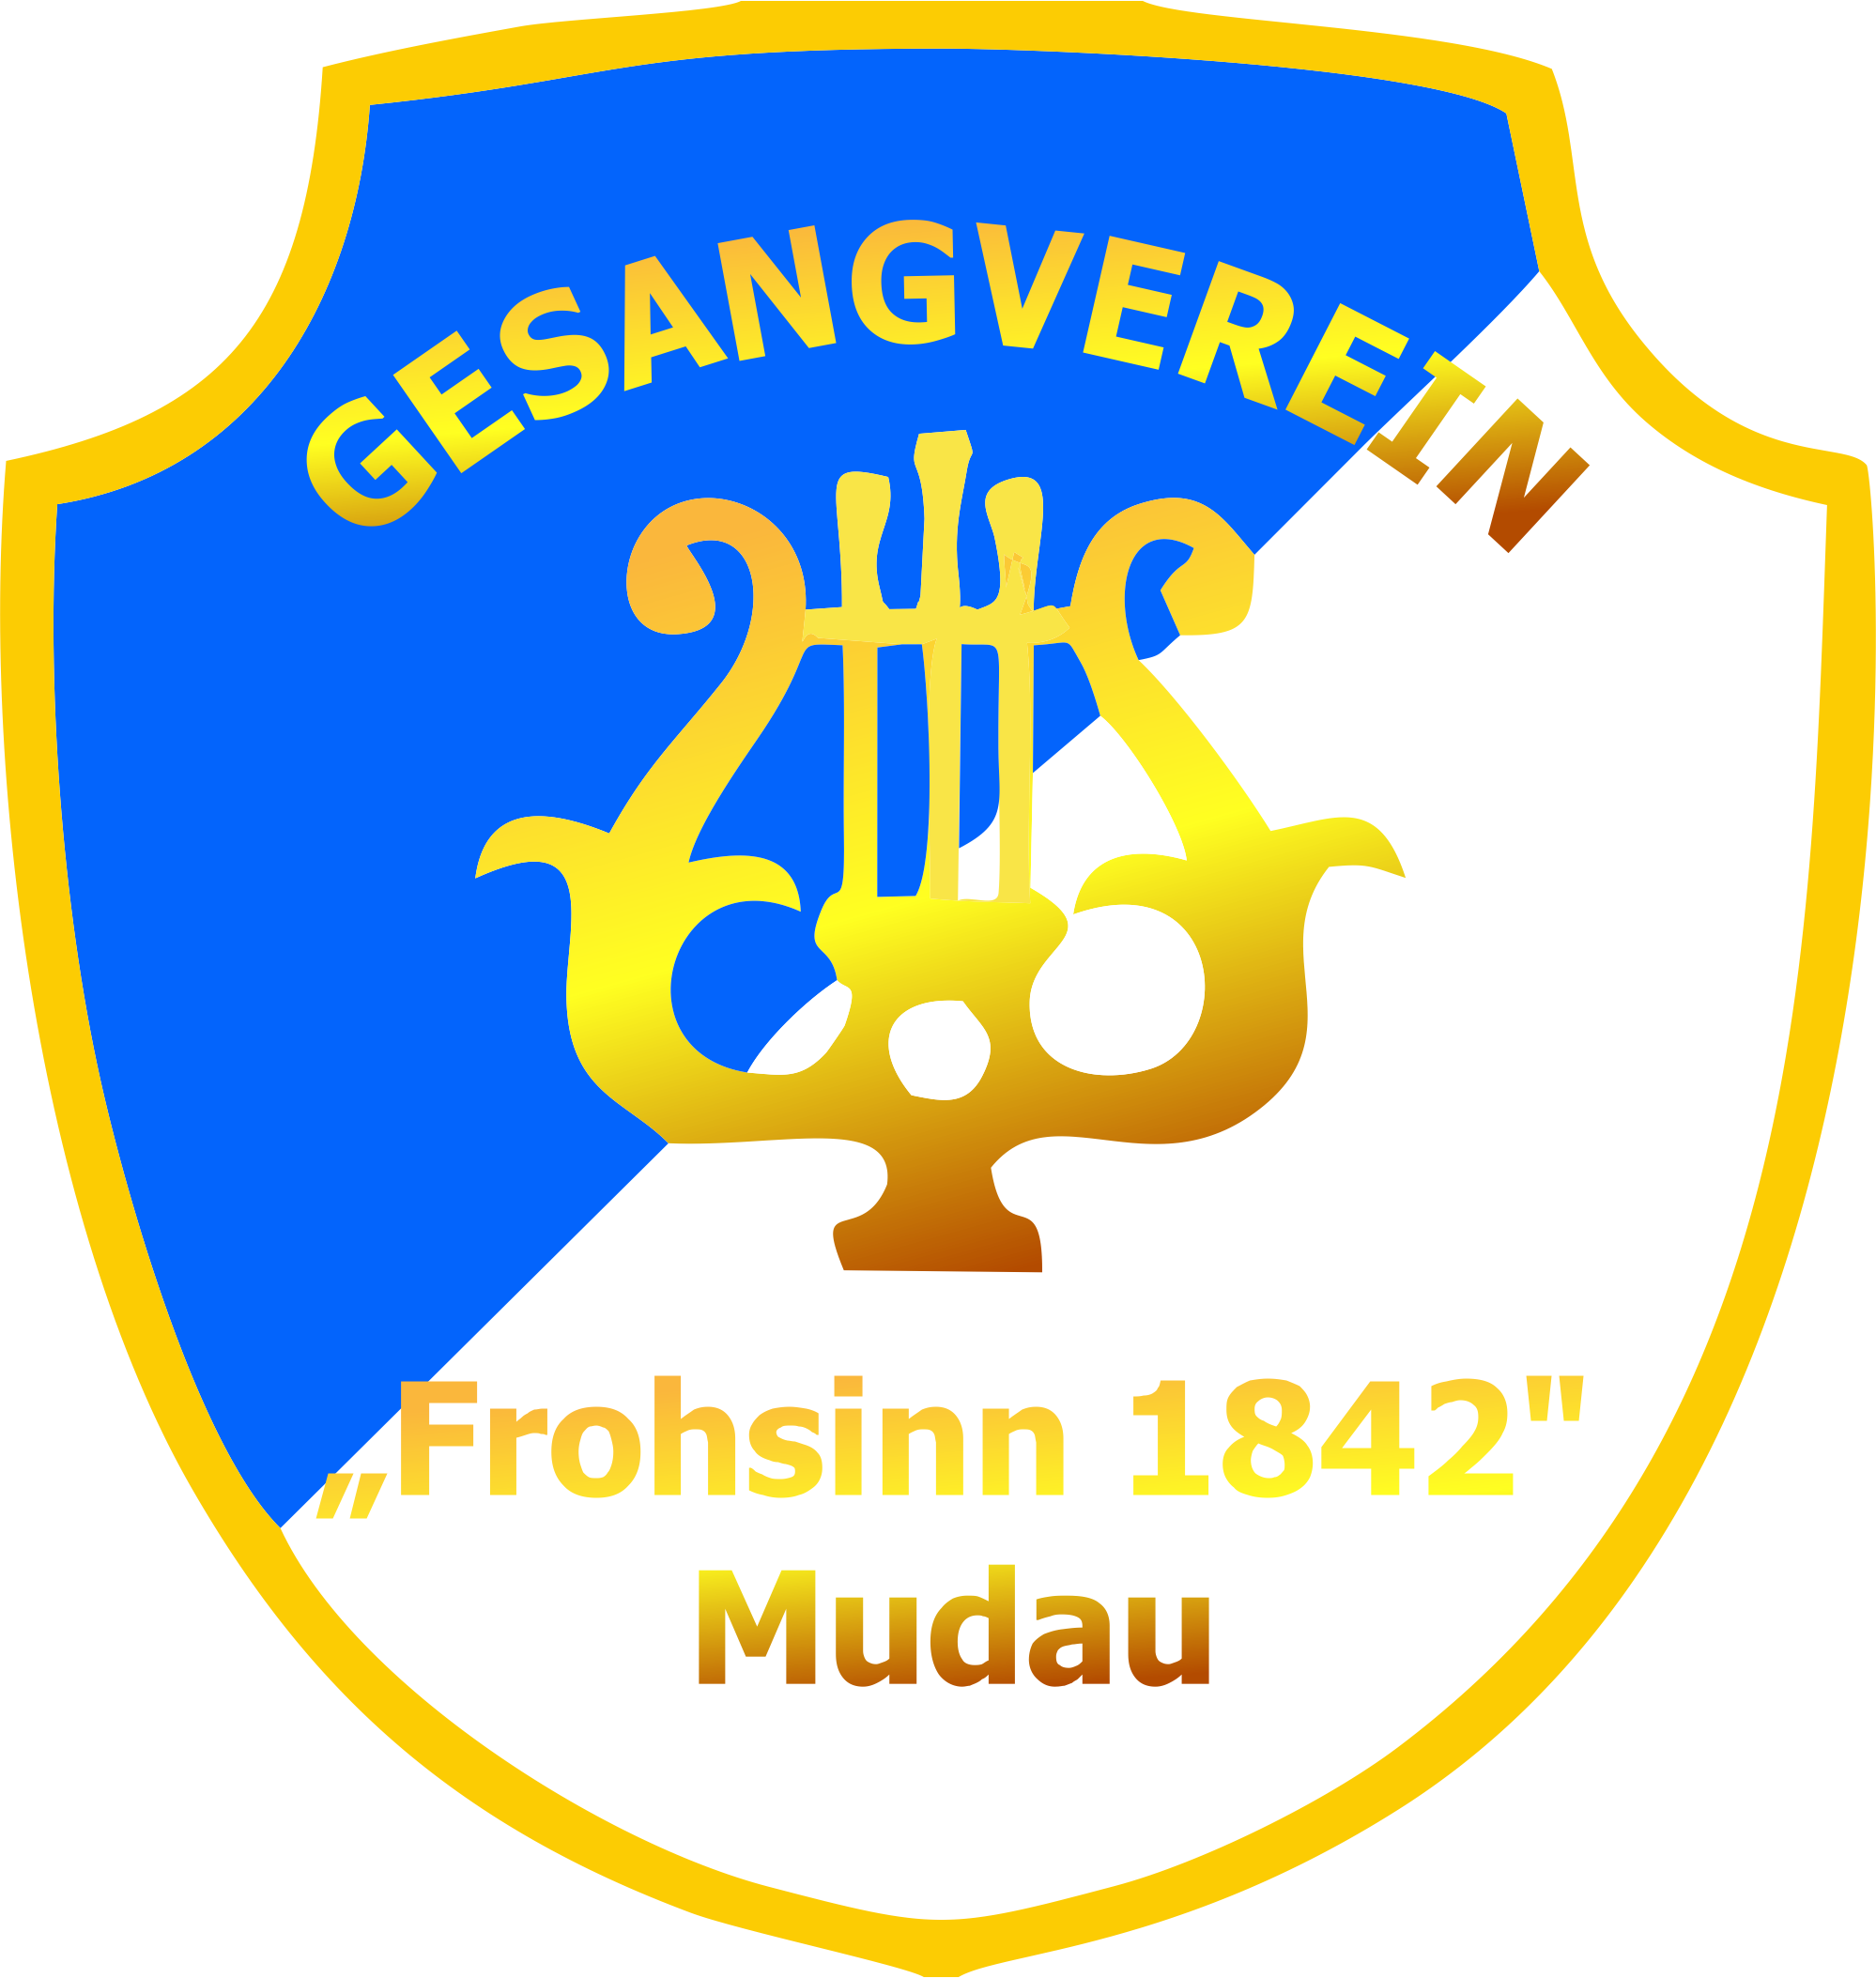 Gesangverein "Frohsinn 1842" Mudau e.V.